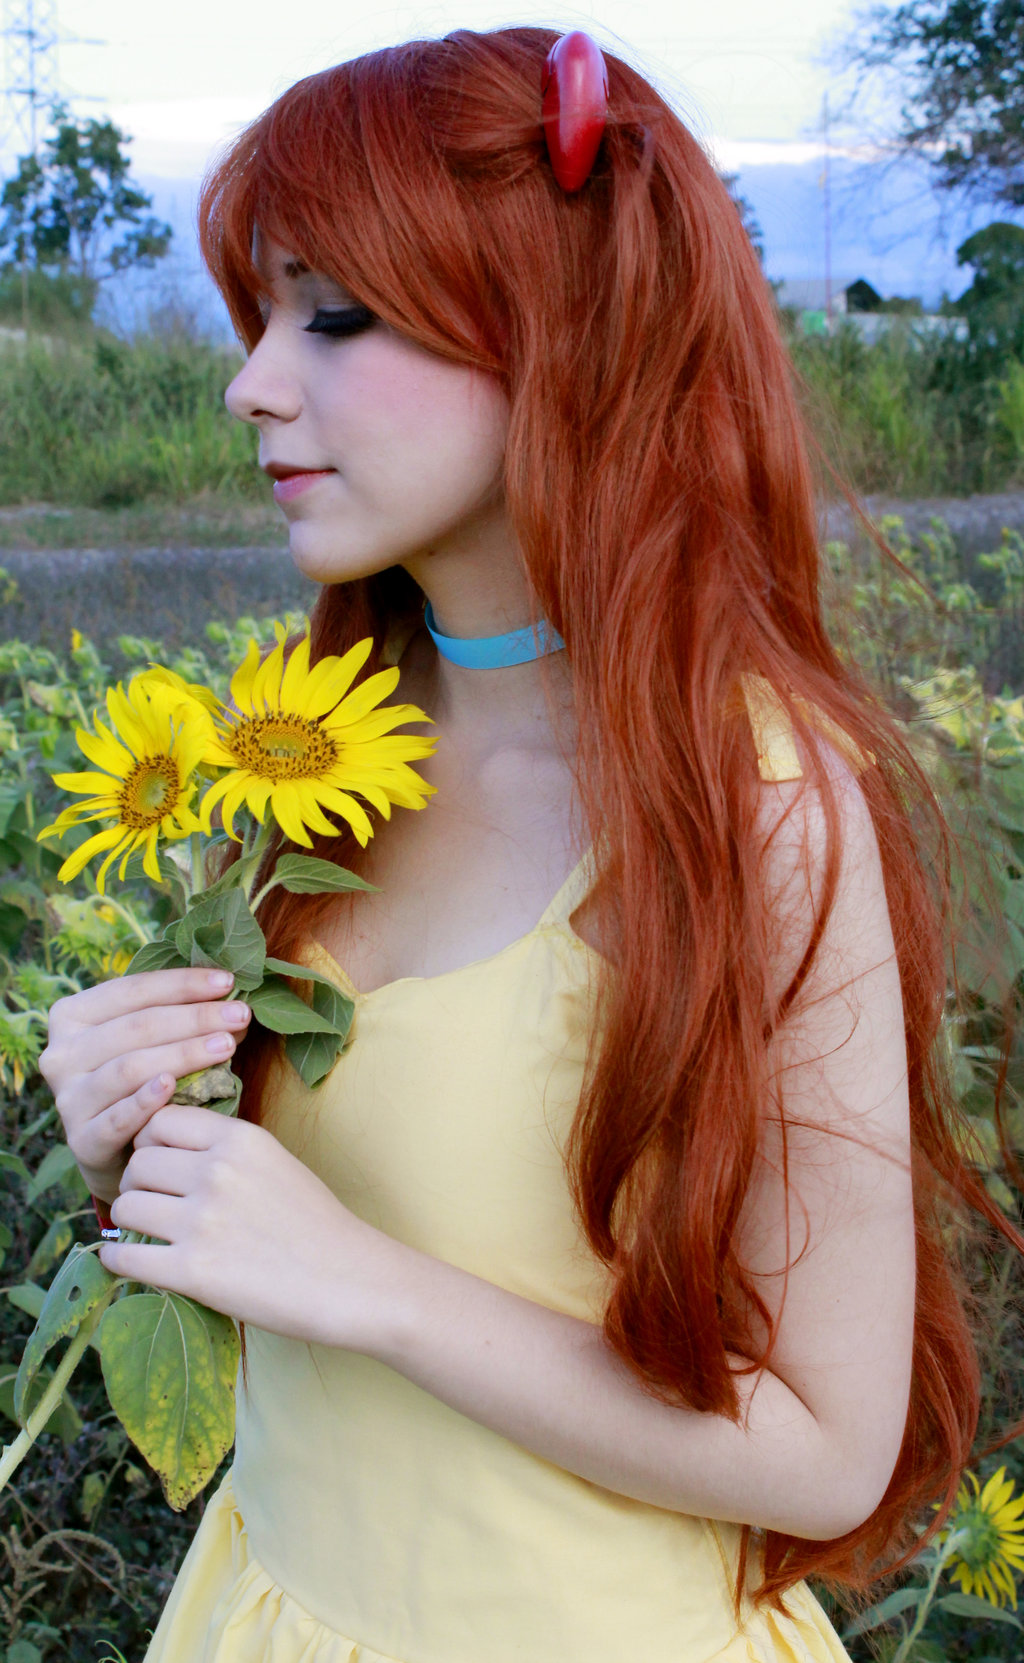 Asuka Yellow Sundress Cosplay - Sunflower Fields by SailorMappy